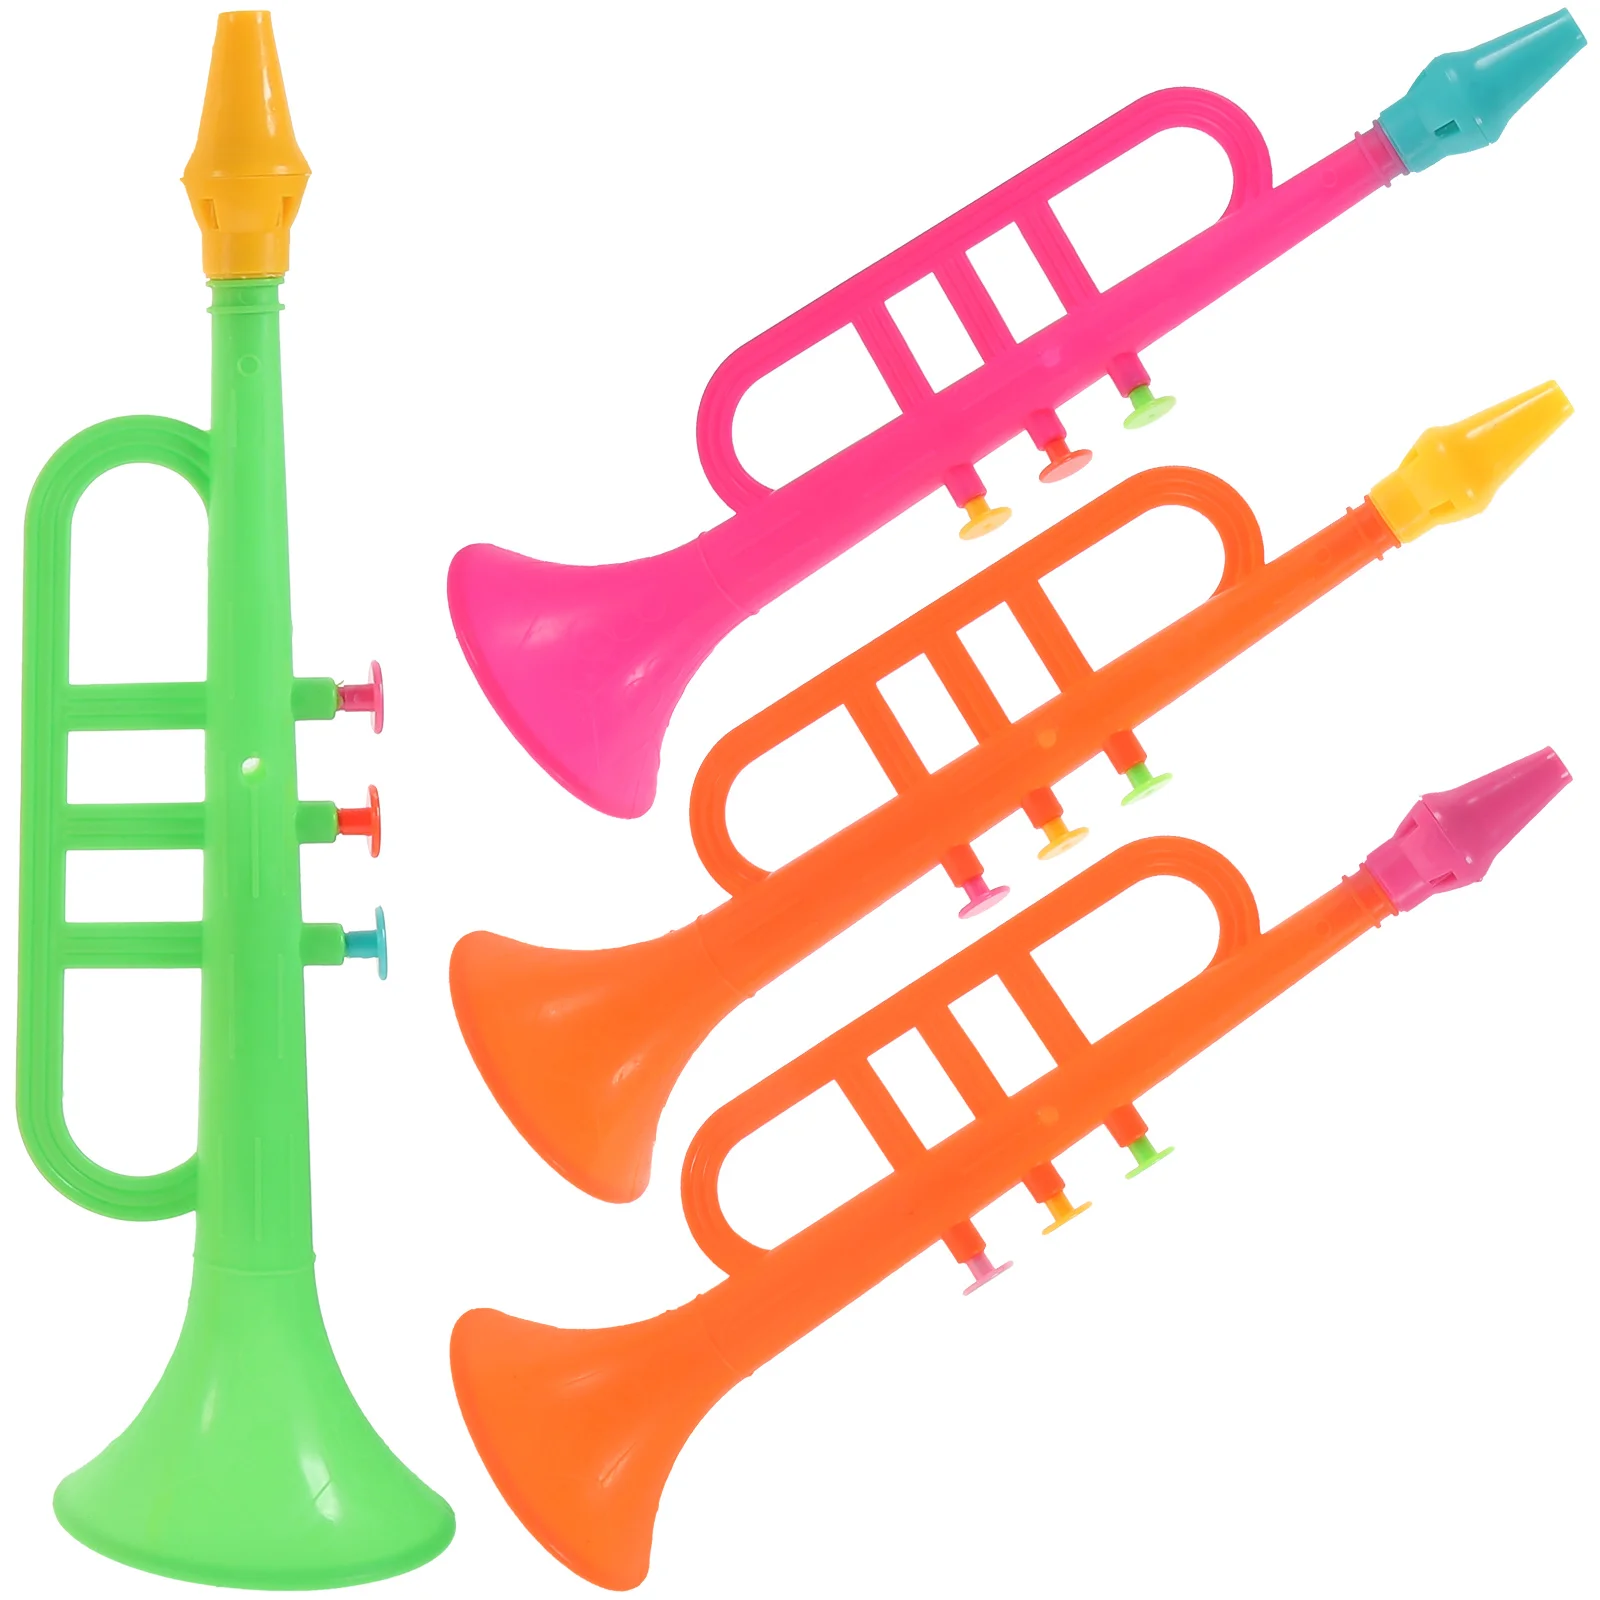 

4pcs Simulation Trumpets Interesting Plastic Trumpets Portable Colorful Trumpets